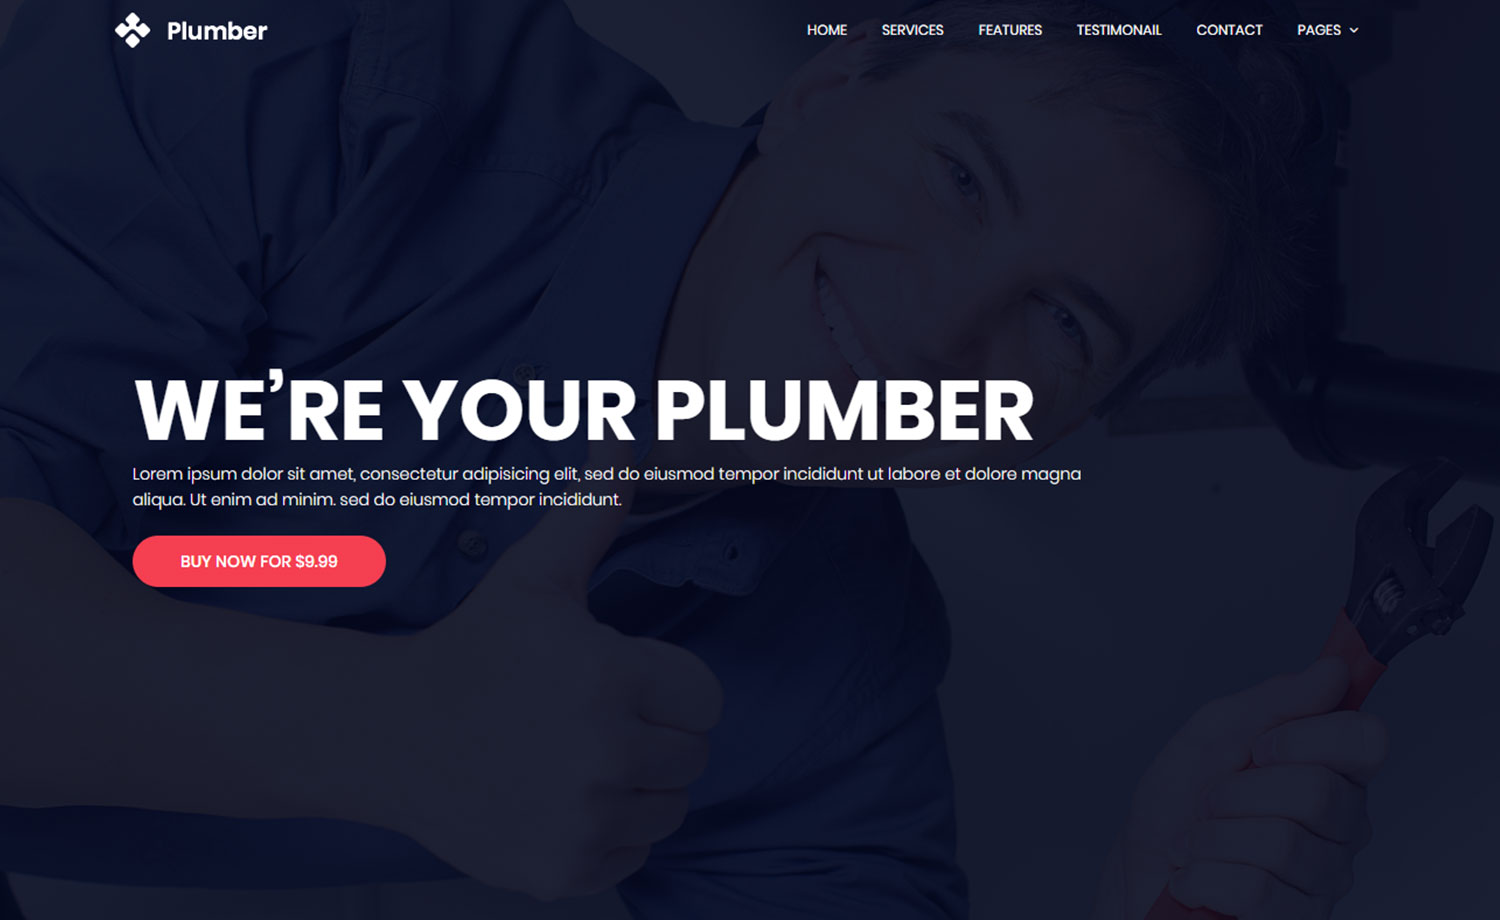 Plumber – Free HTML5 Plumbing Website Template